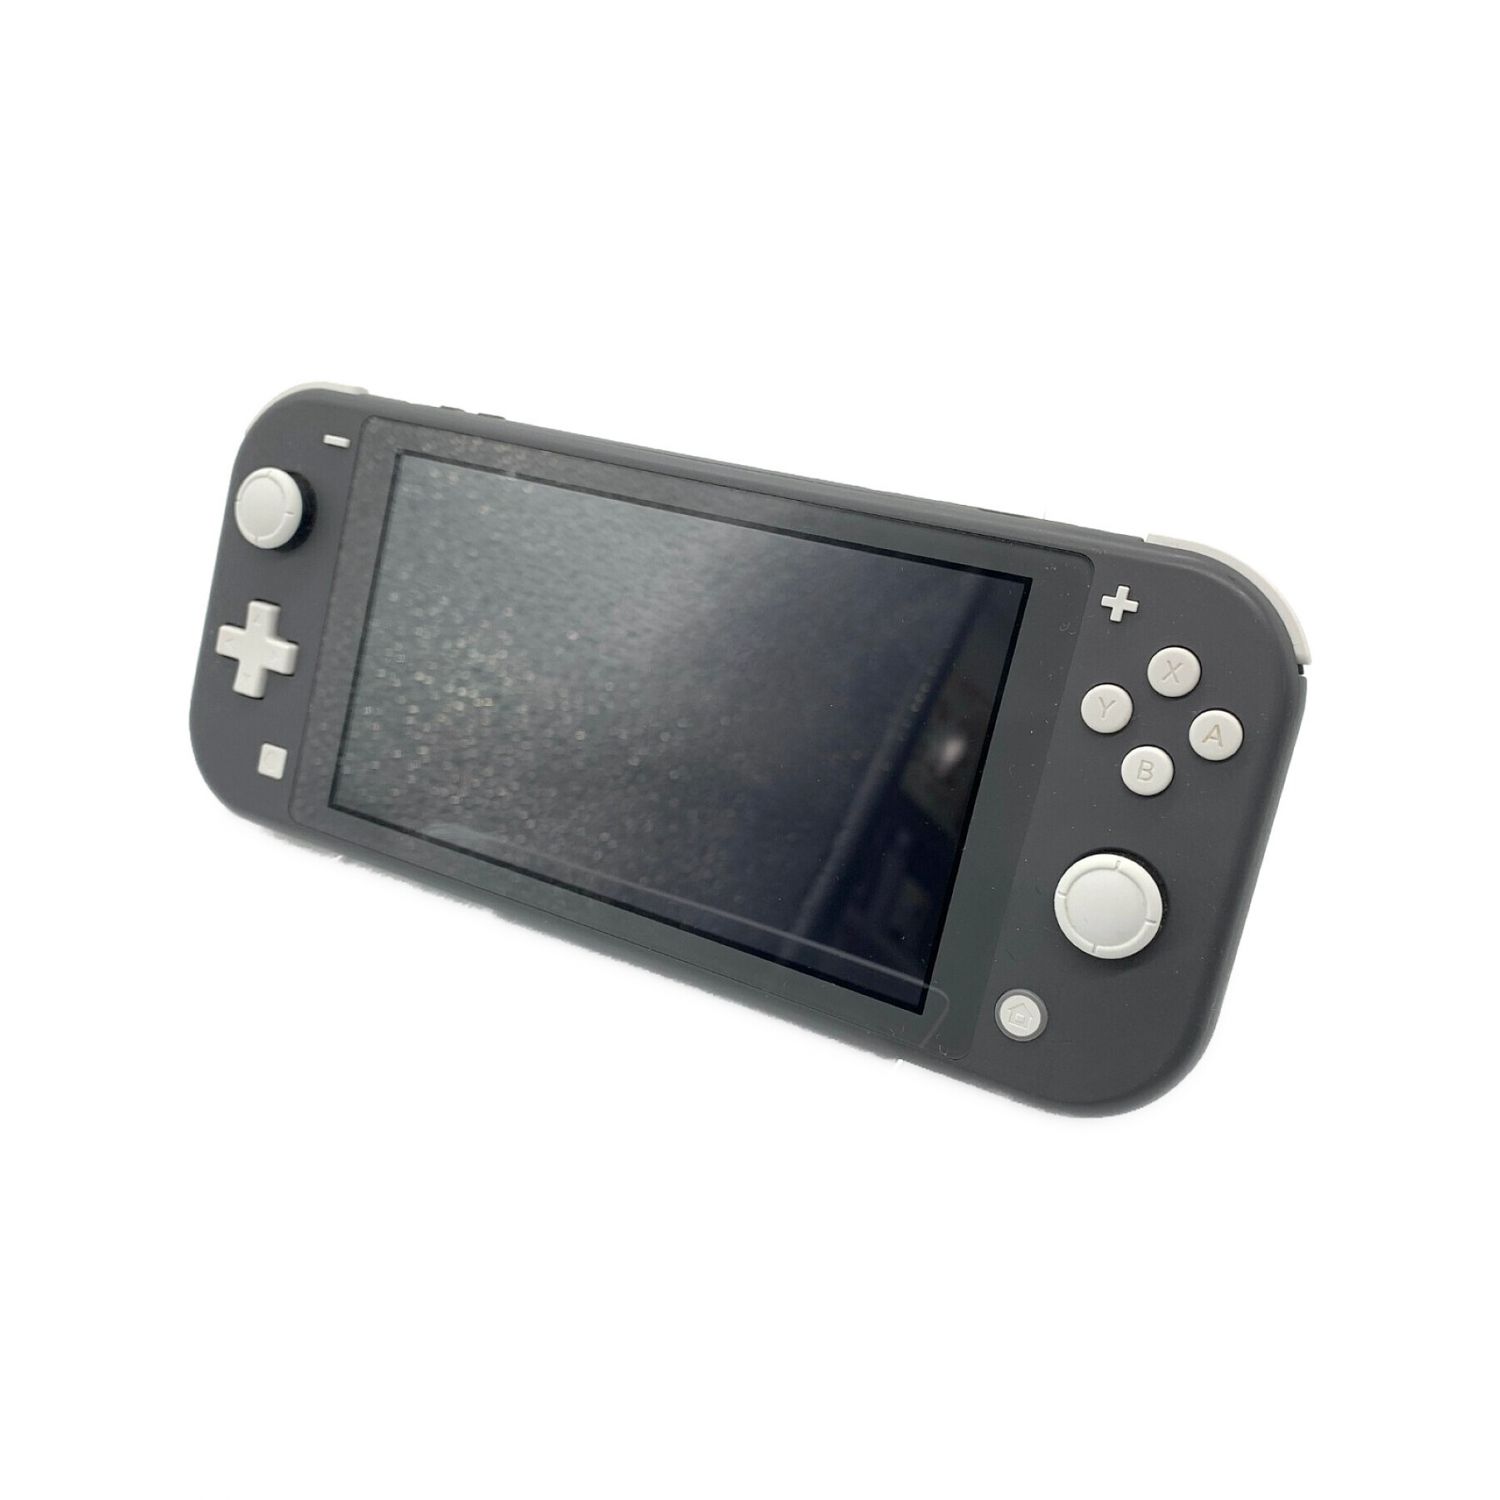 Nintendo (ニンテンドウ) Nintendo Switch Lite HDH-001 グレー ...